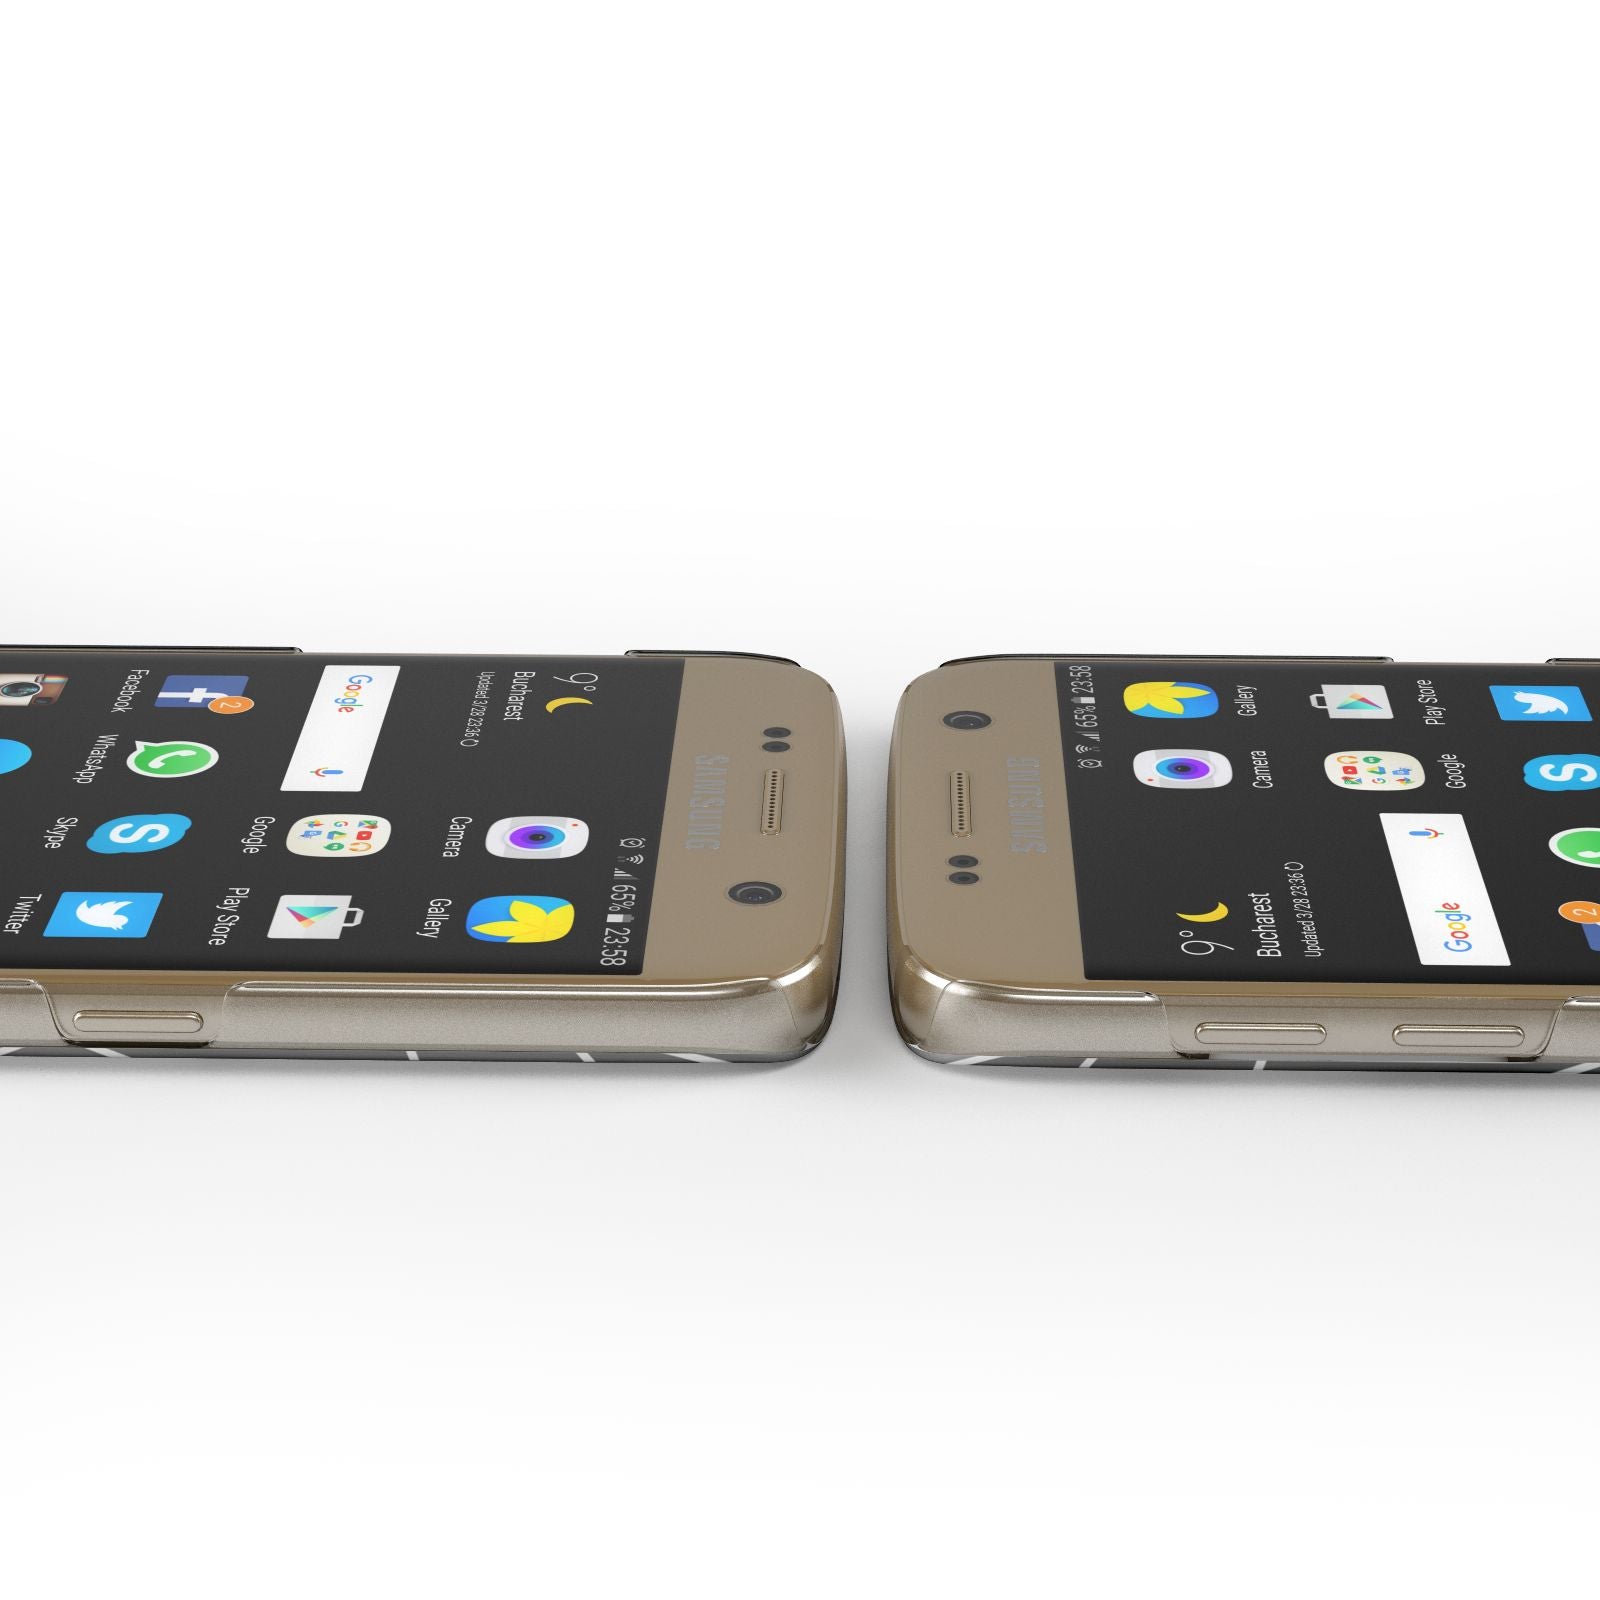 Personalised Black Initials Geometric Samsung Galaxy Case Ports Cutout